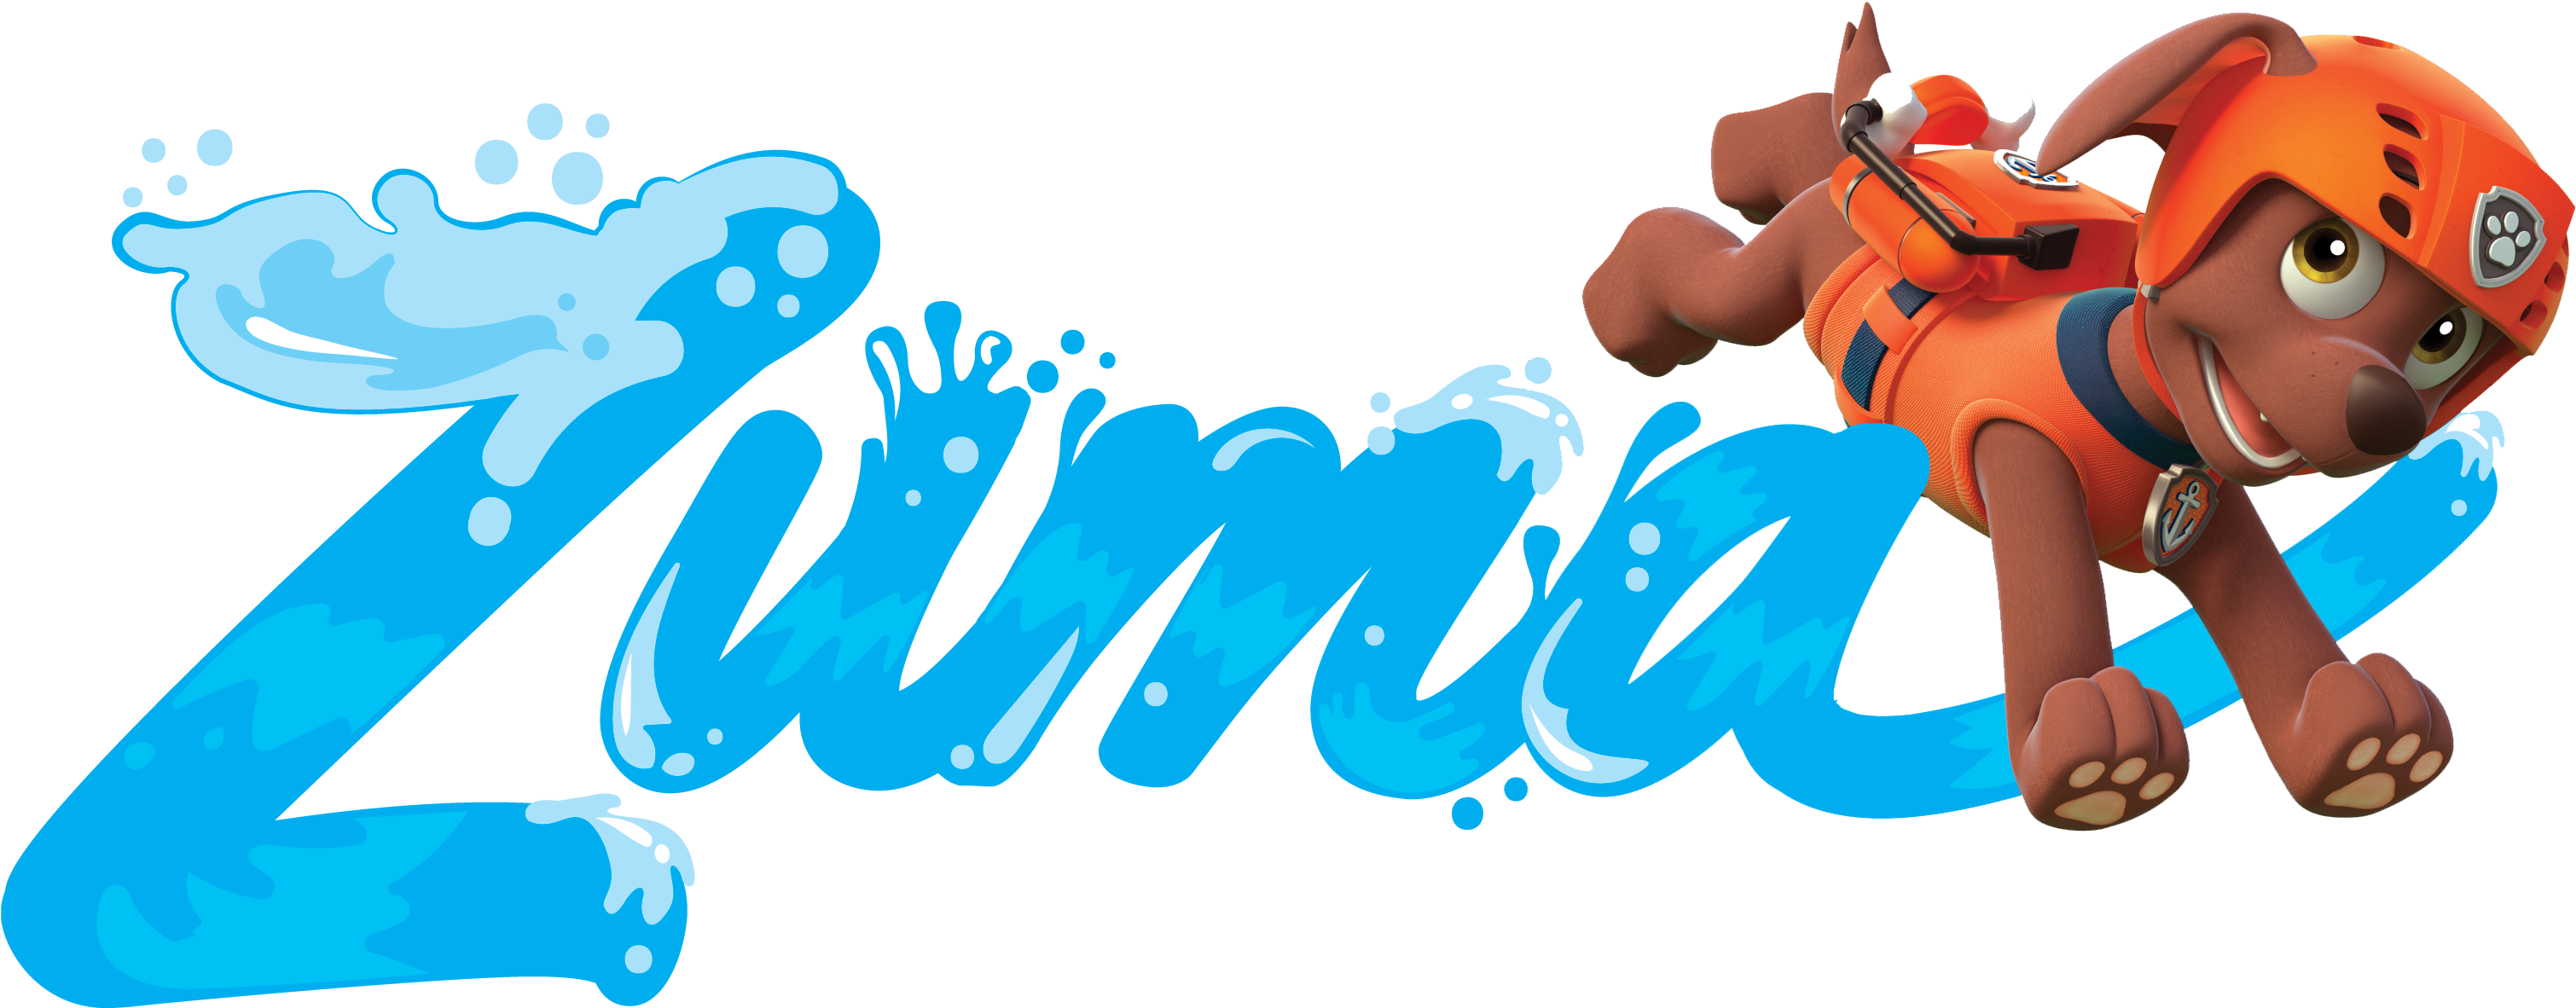 Nickelodeon Nick Jr - Paw Patrol Zuma Name (3093x1363)